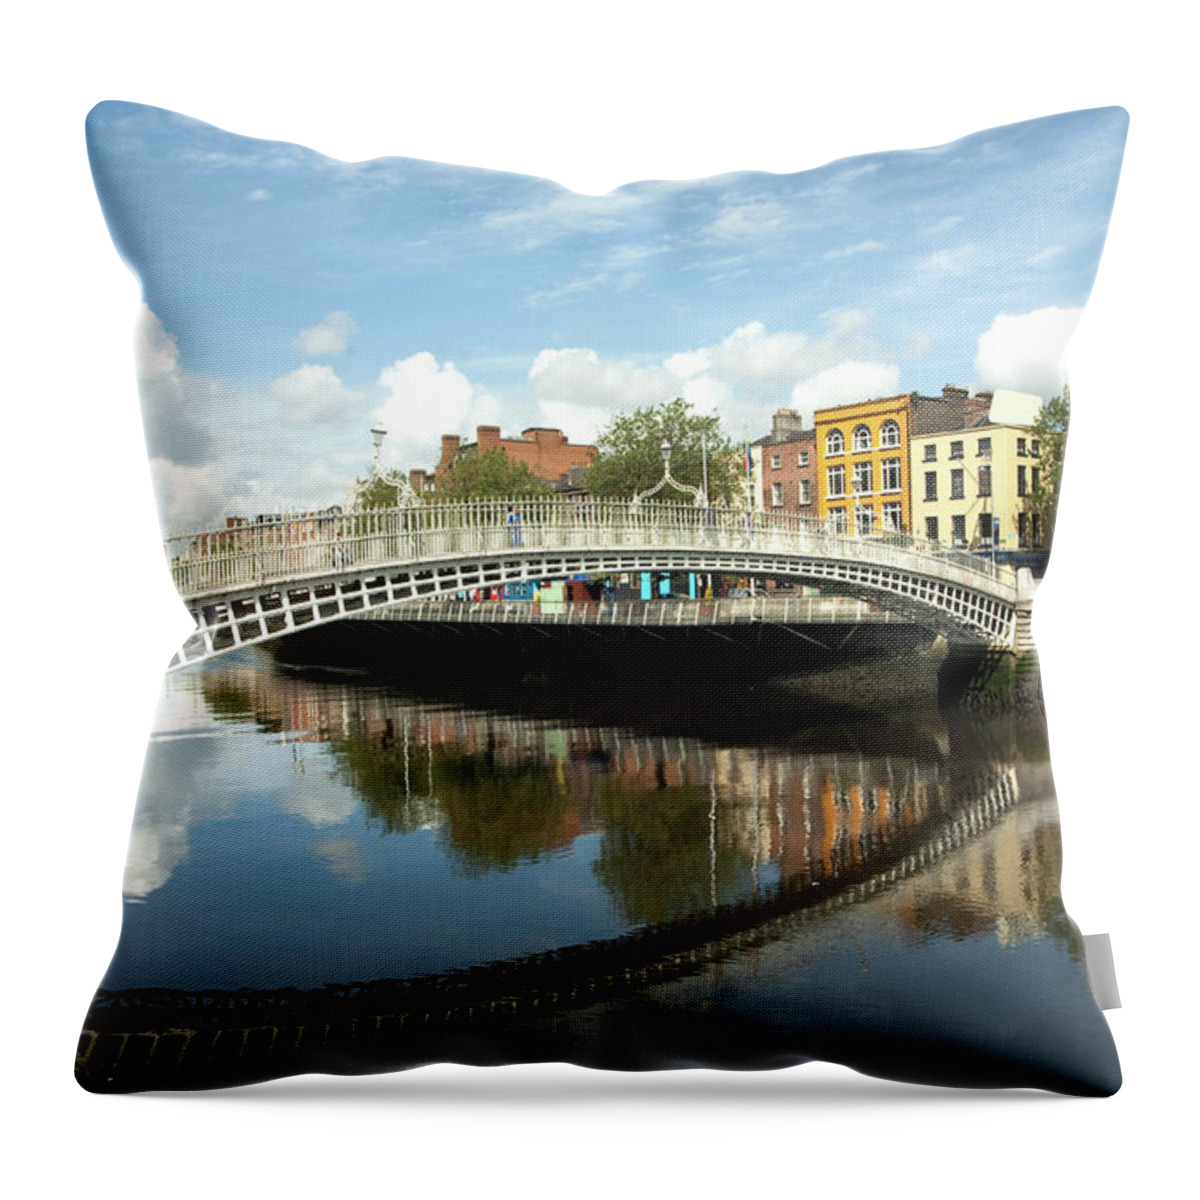 Dublin Throw Pillow featuring the photograph The Famous Hapenny Bridge In Dublin by Stevenallan